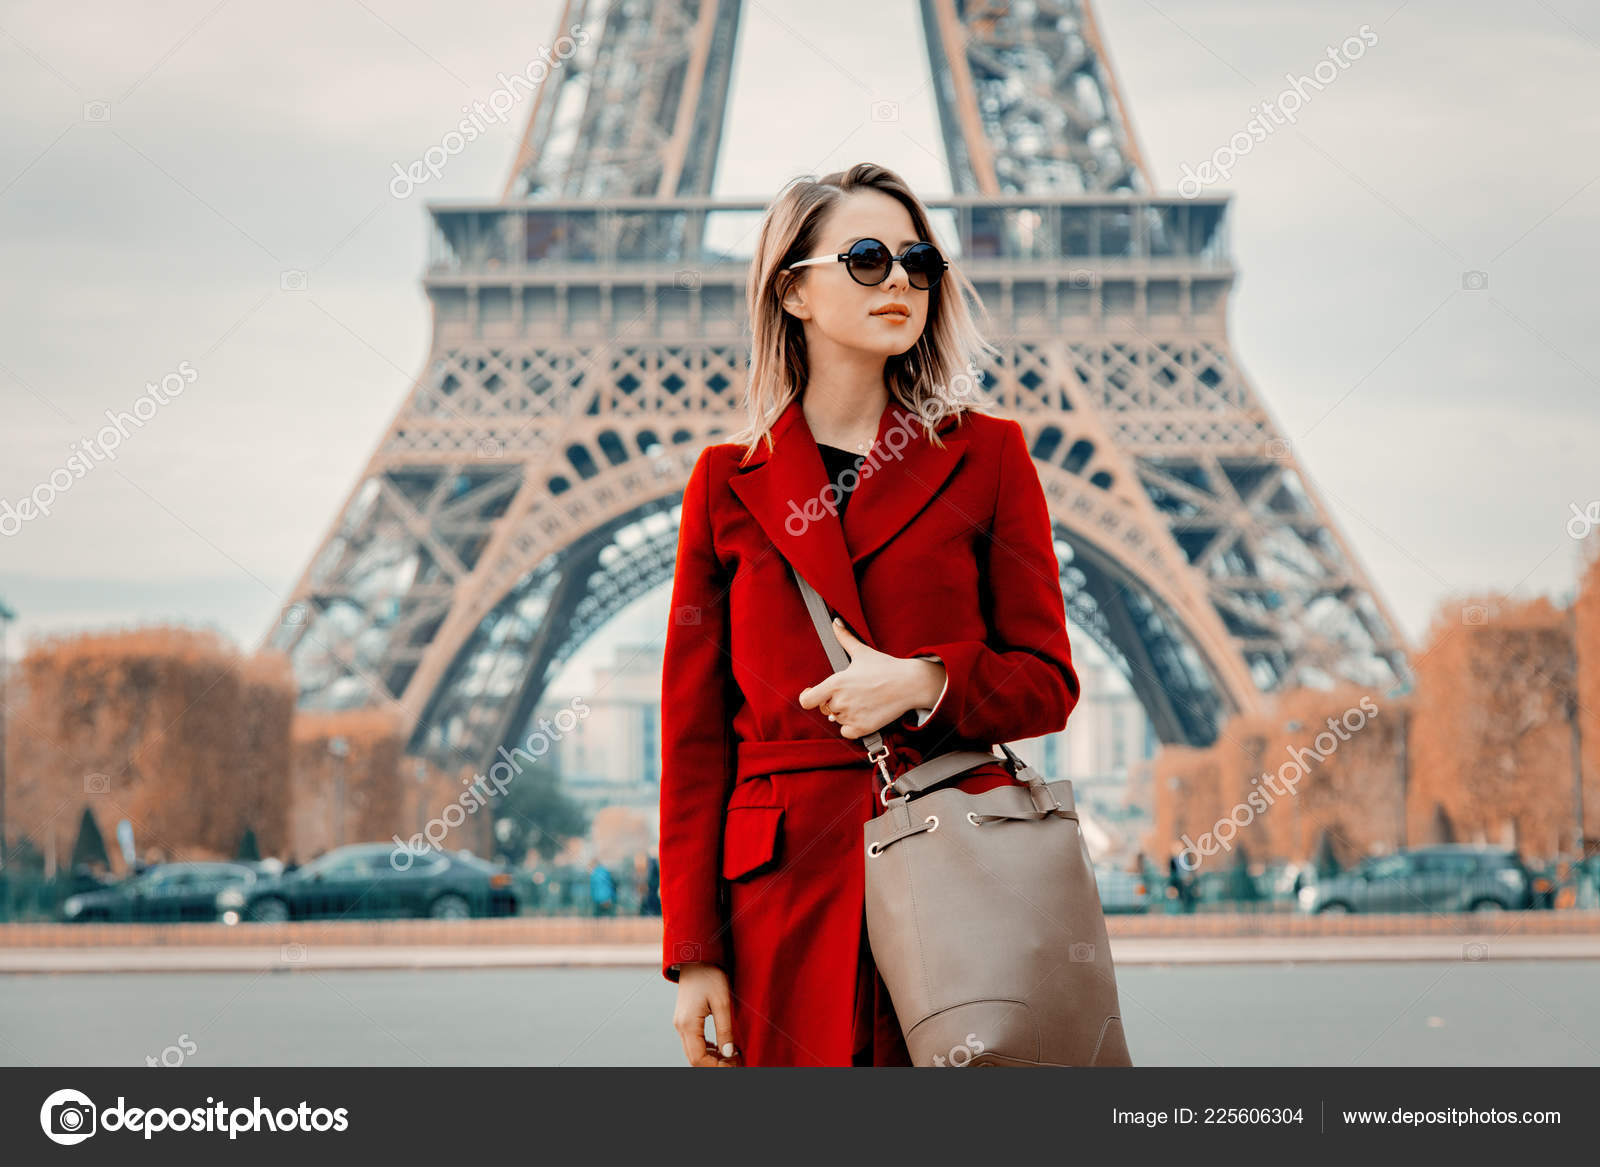 The It Girl Bag, According To Parisians